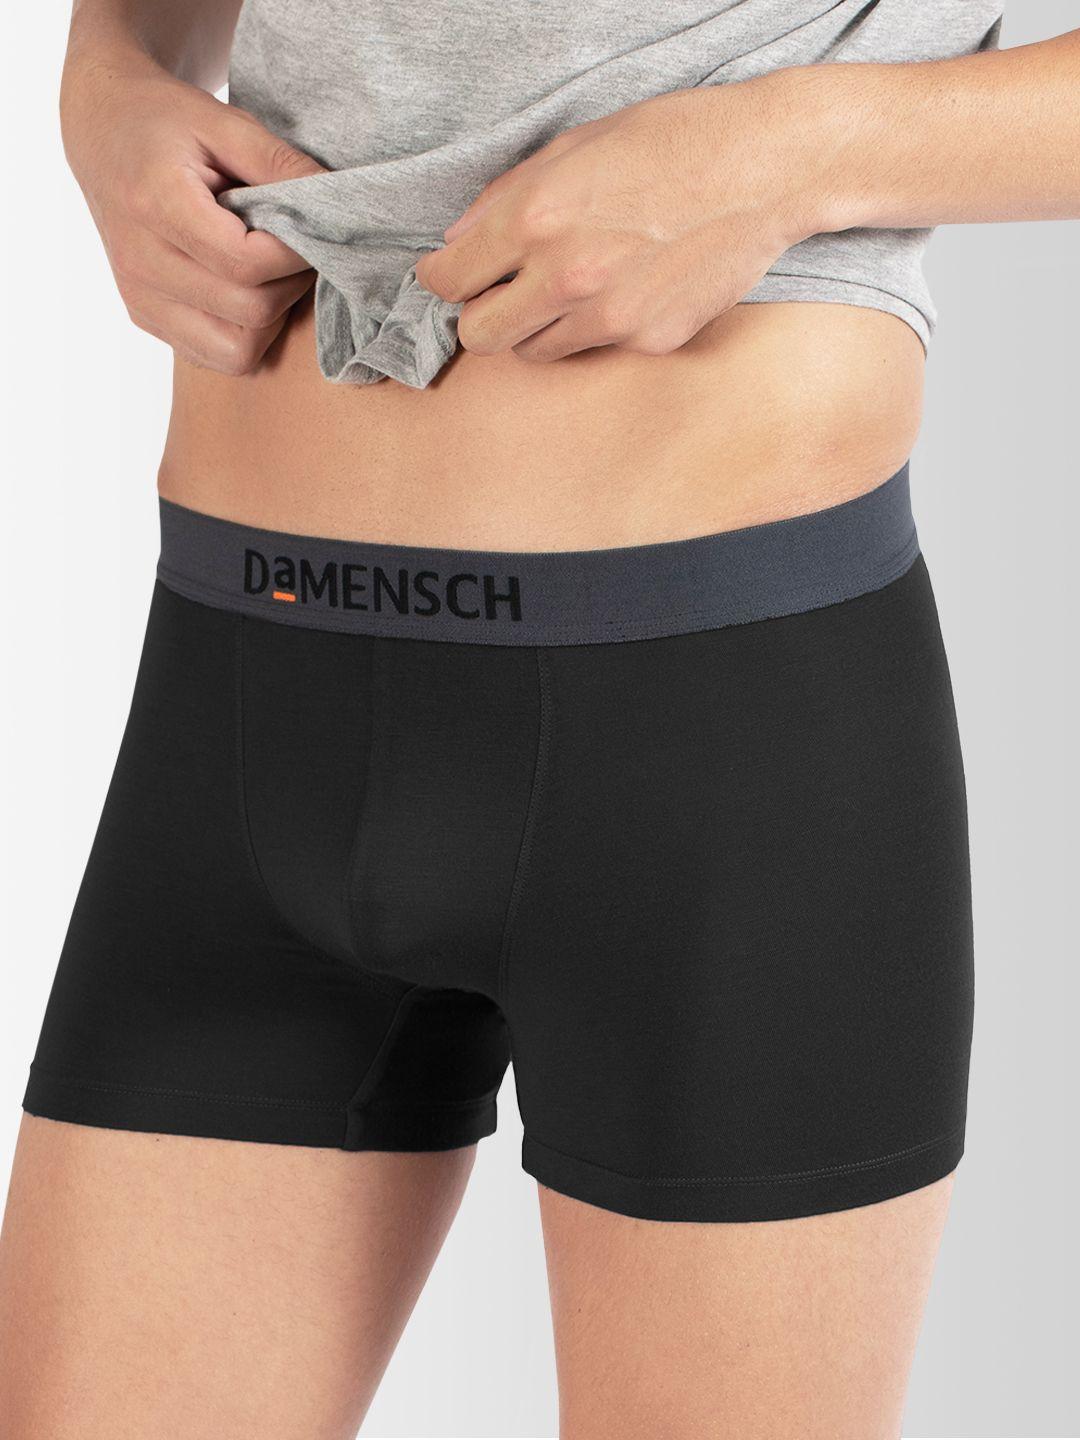 damensch men black deo-soft deodorizing micro modal solid trunks dam-dc-t-ob